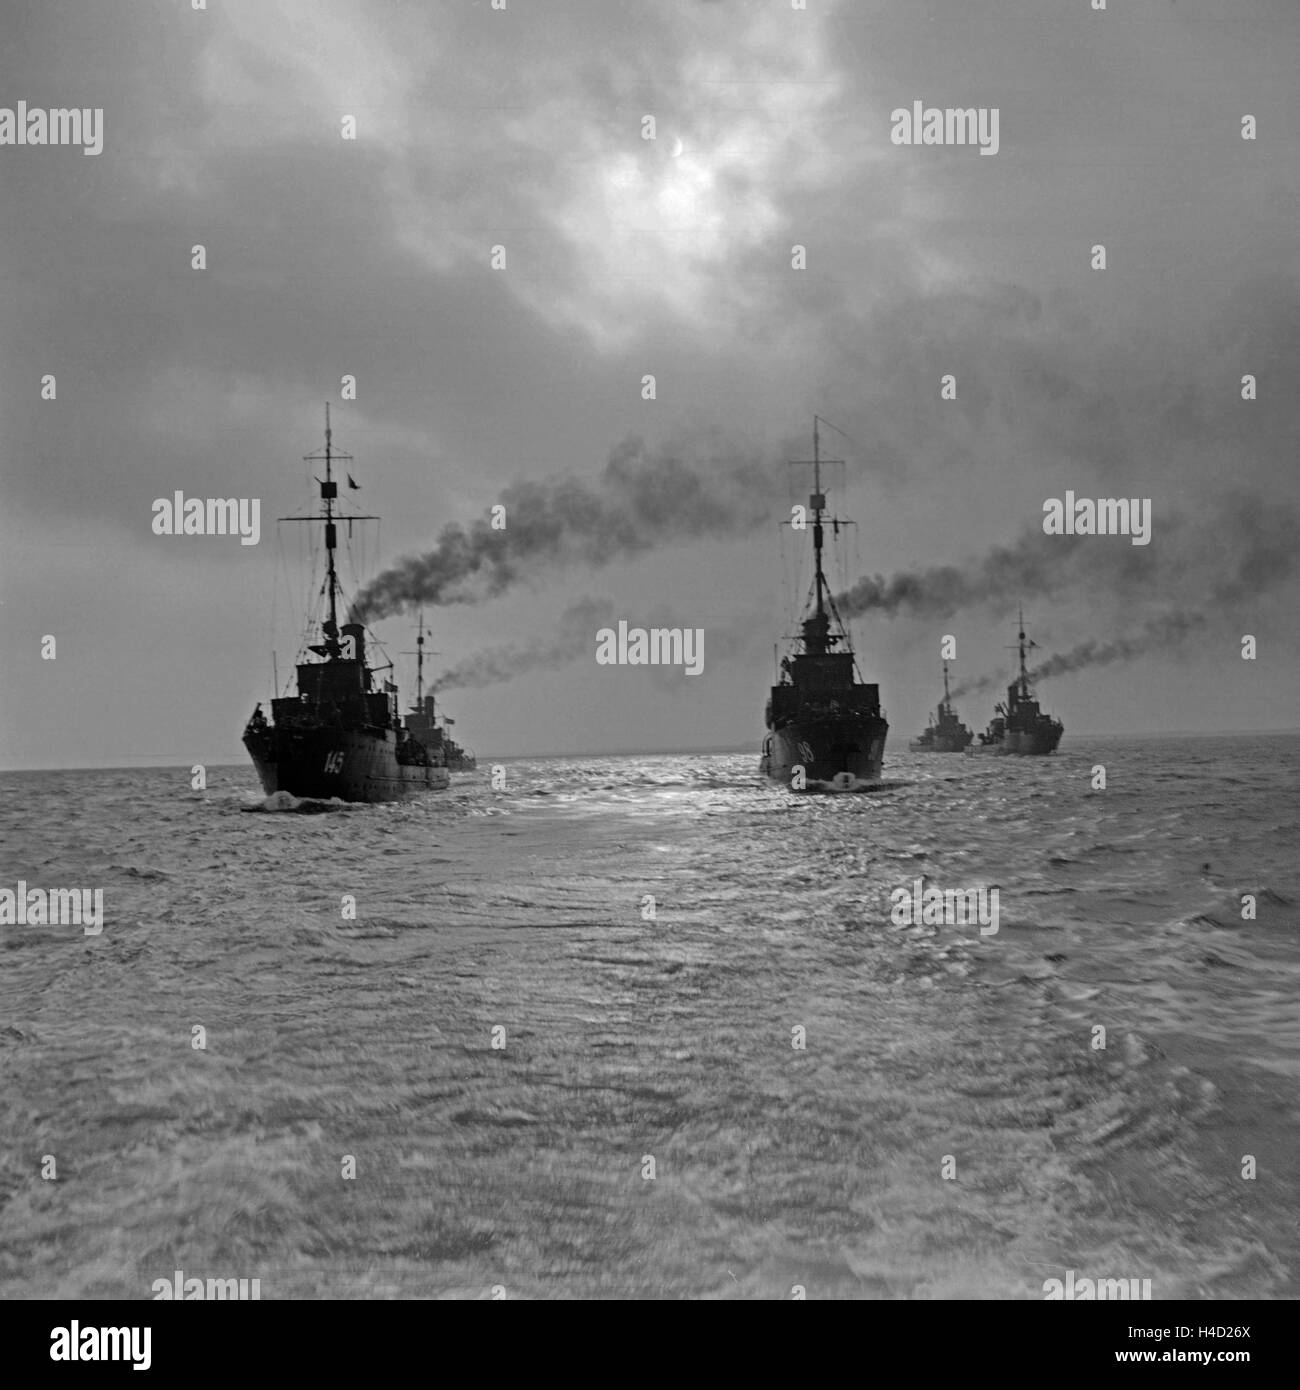 Minensuchboote der 2. Minensuch Flotille bei einer Übung in Kolonne, Deutschland 1930er Jahre. Minesweepers at an exercise on the sea, Germany 1930s. Stock Photo